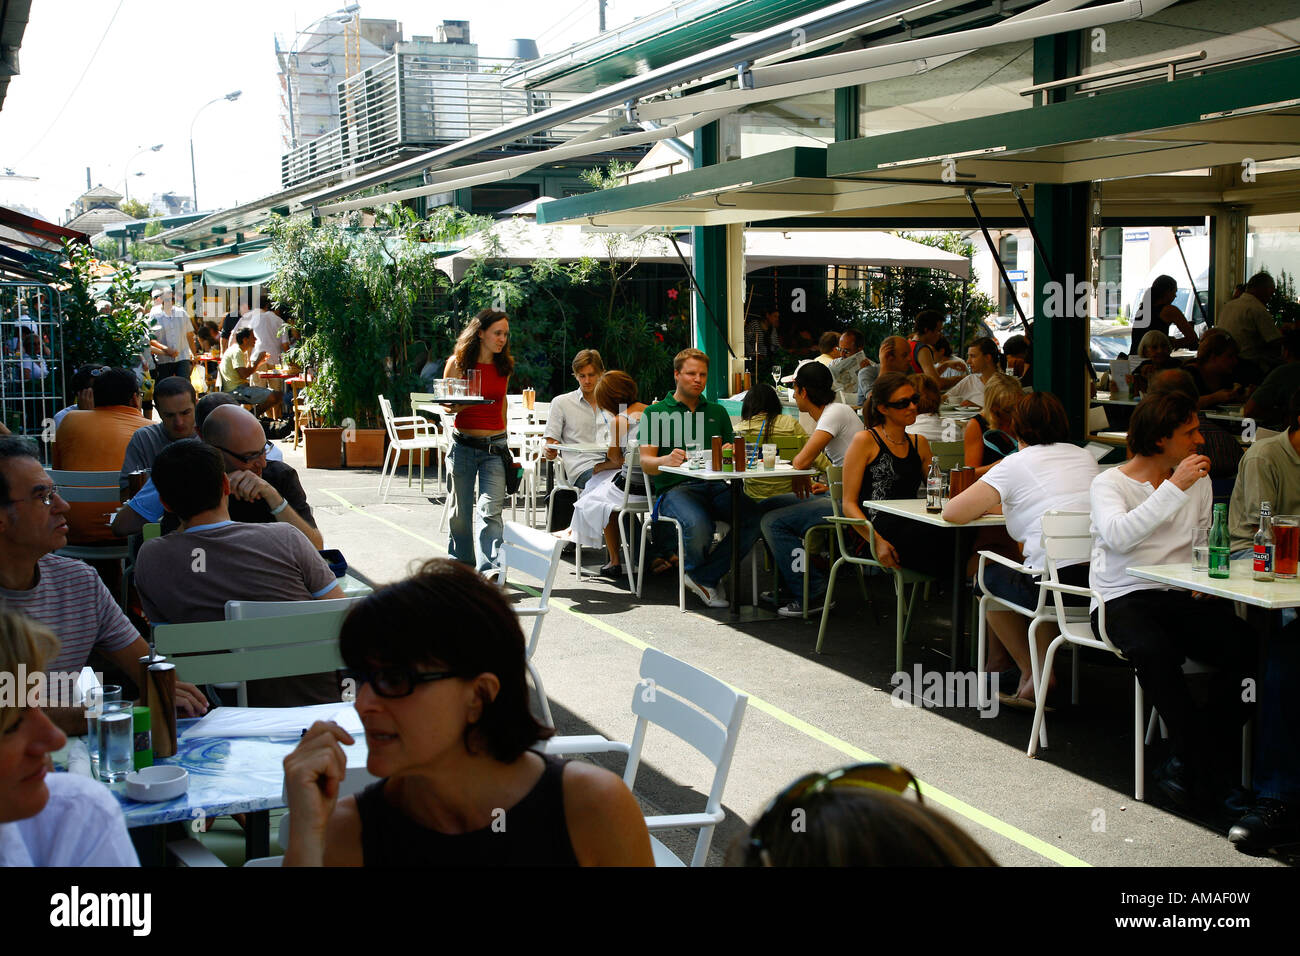 Aug 2008 - People sitting at an outdoors restaurant in the Naschmarkt Vienna Austria Stock Photo